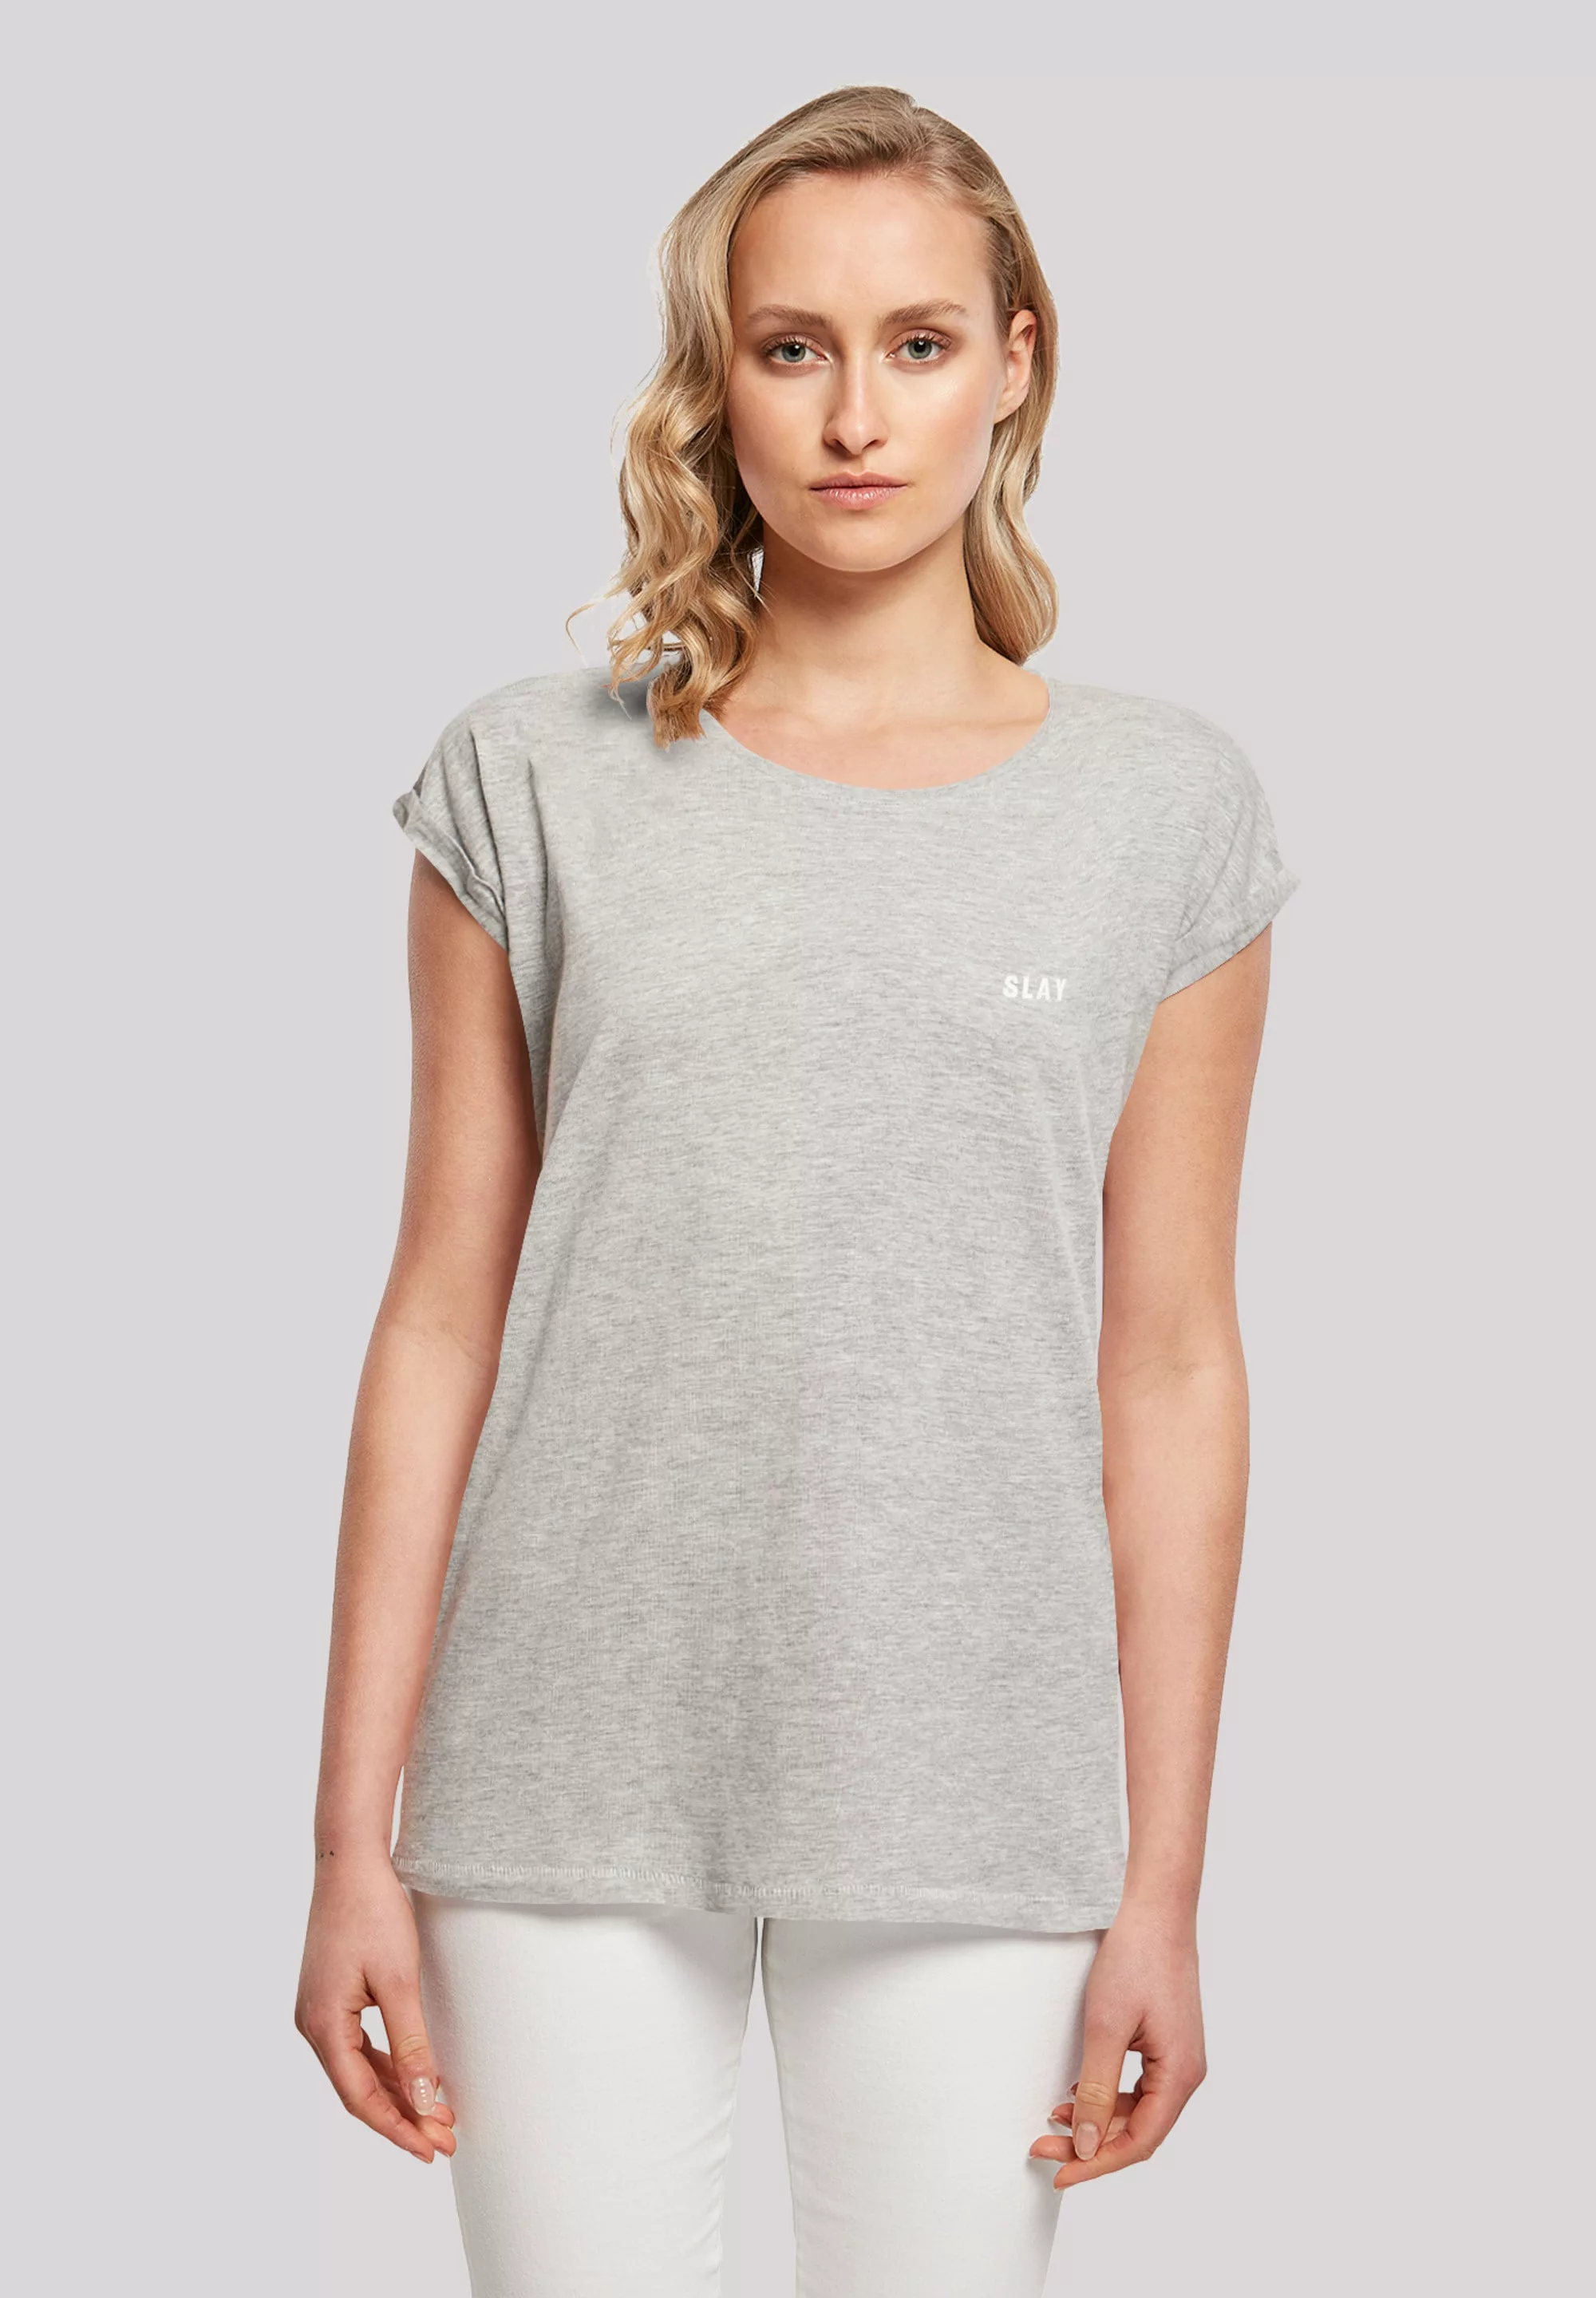 F4NT4STIC T-Shirt "Slay" günstig online kaufen